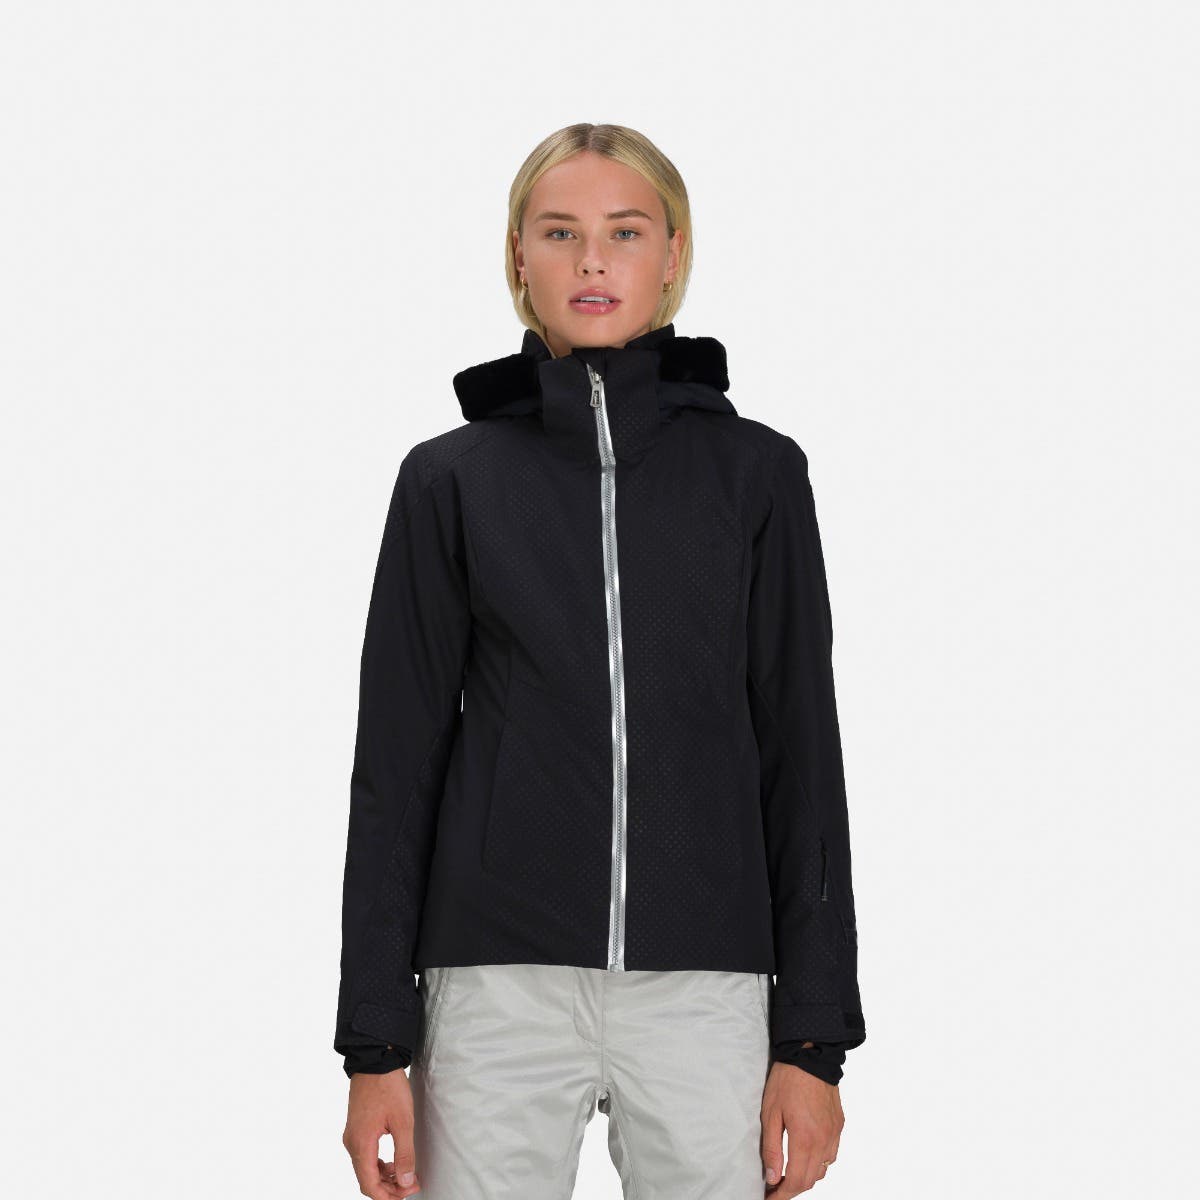 Rossignol Controle Jacket - Ski jacket - Women's